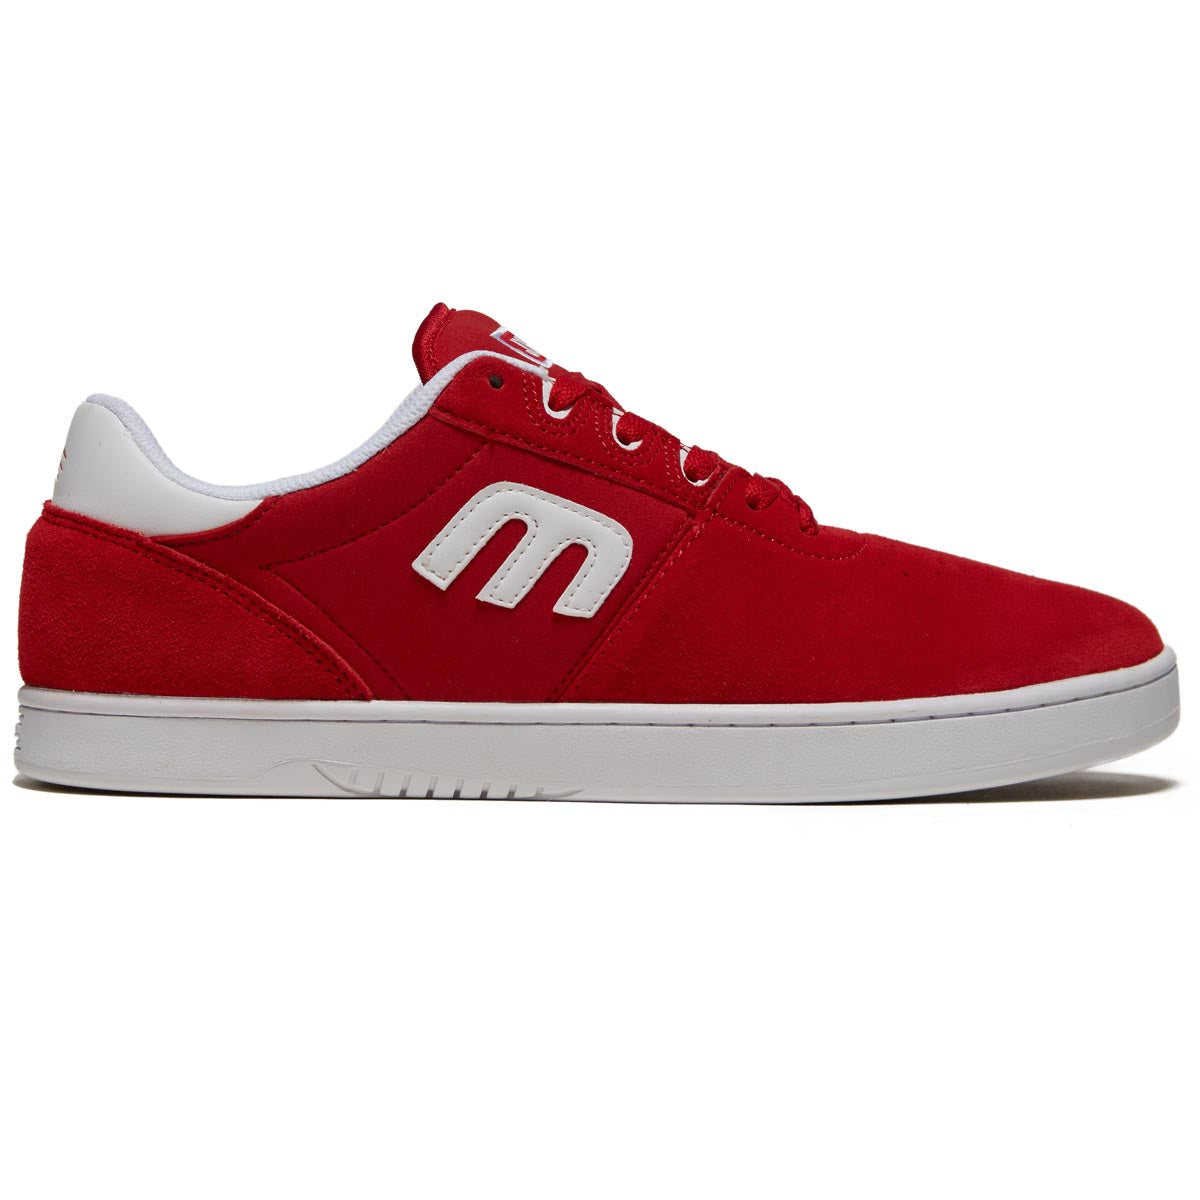 Etnies Josl1n Shoes - Red/White image 1